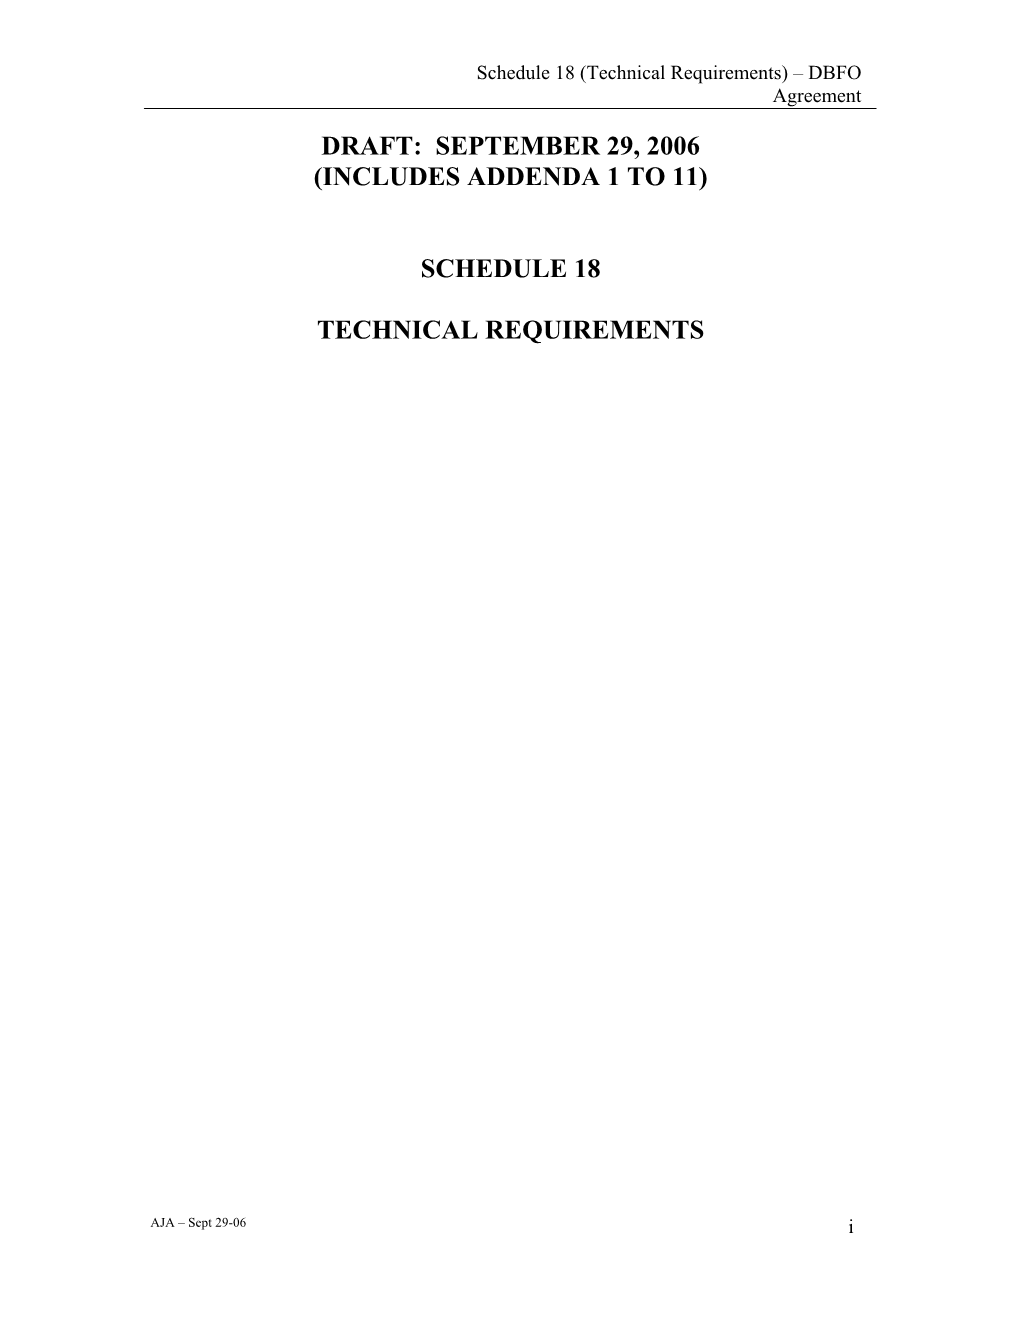 Schedule 18 (Technical Requirements) – DBFO Agreement